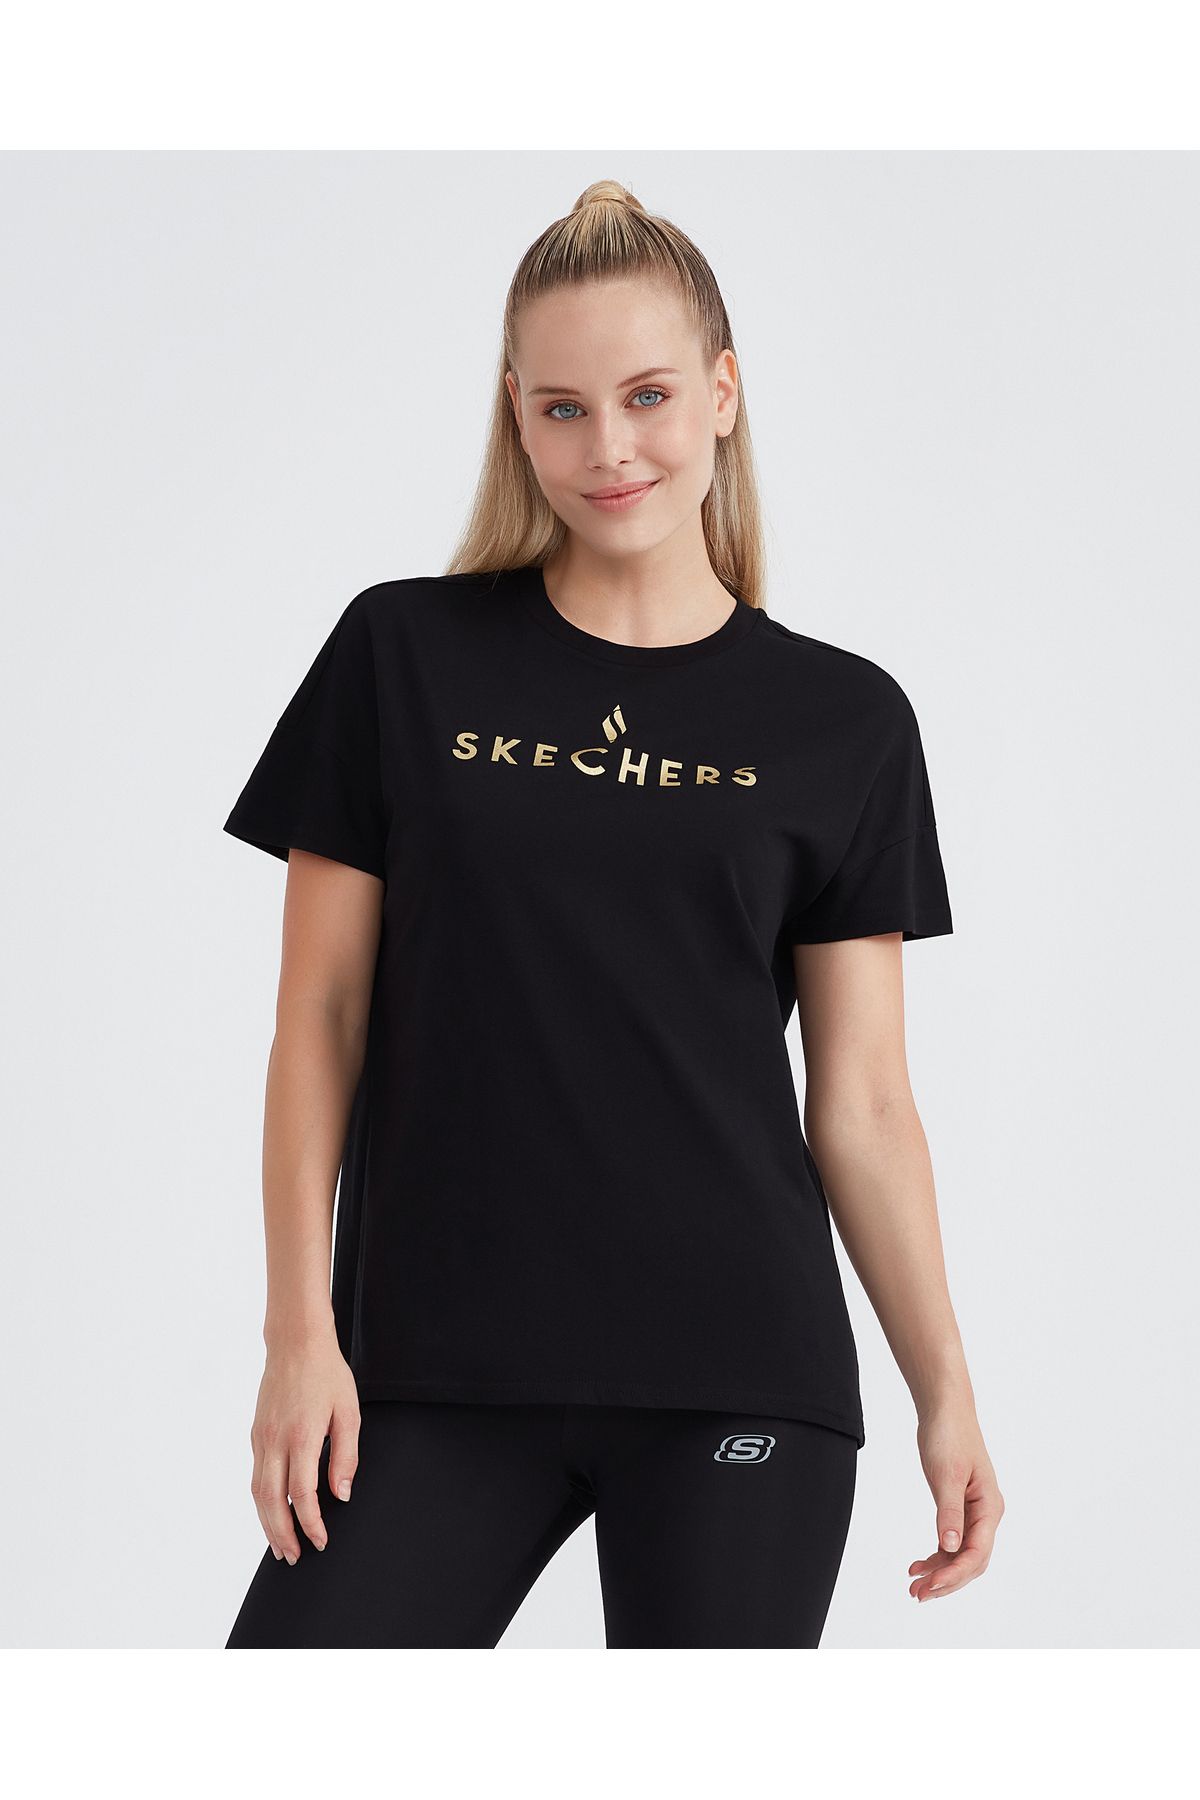 Skechers W Graphic Tee Crew Neck T-shirt Kadın Siyah Tshirt S232161-001